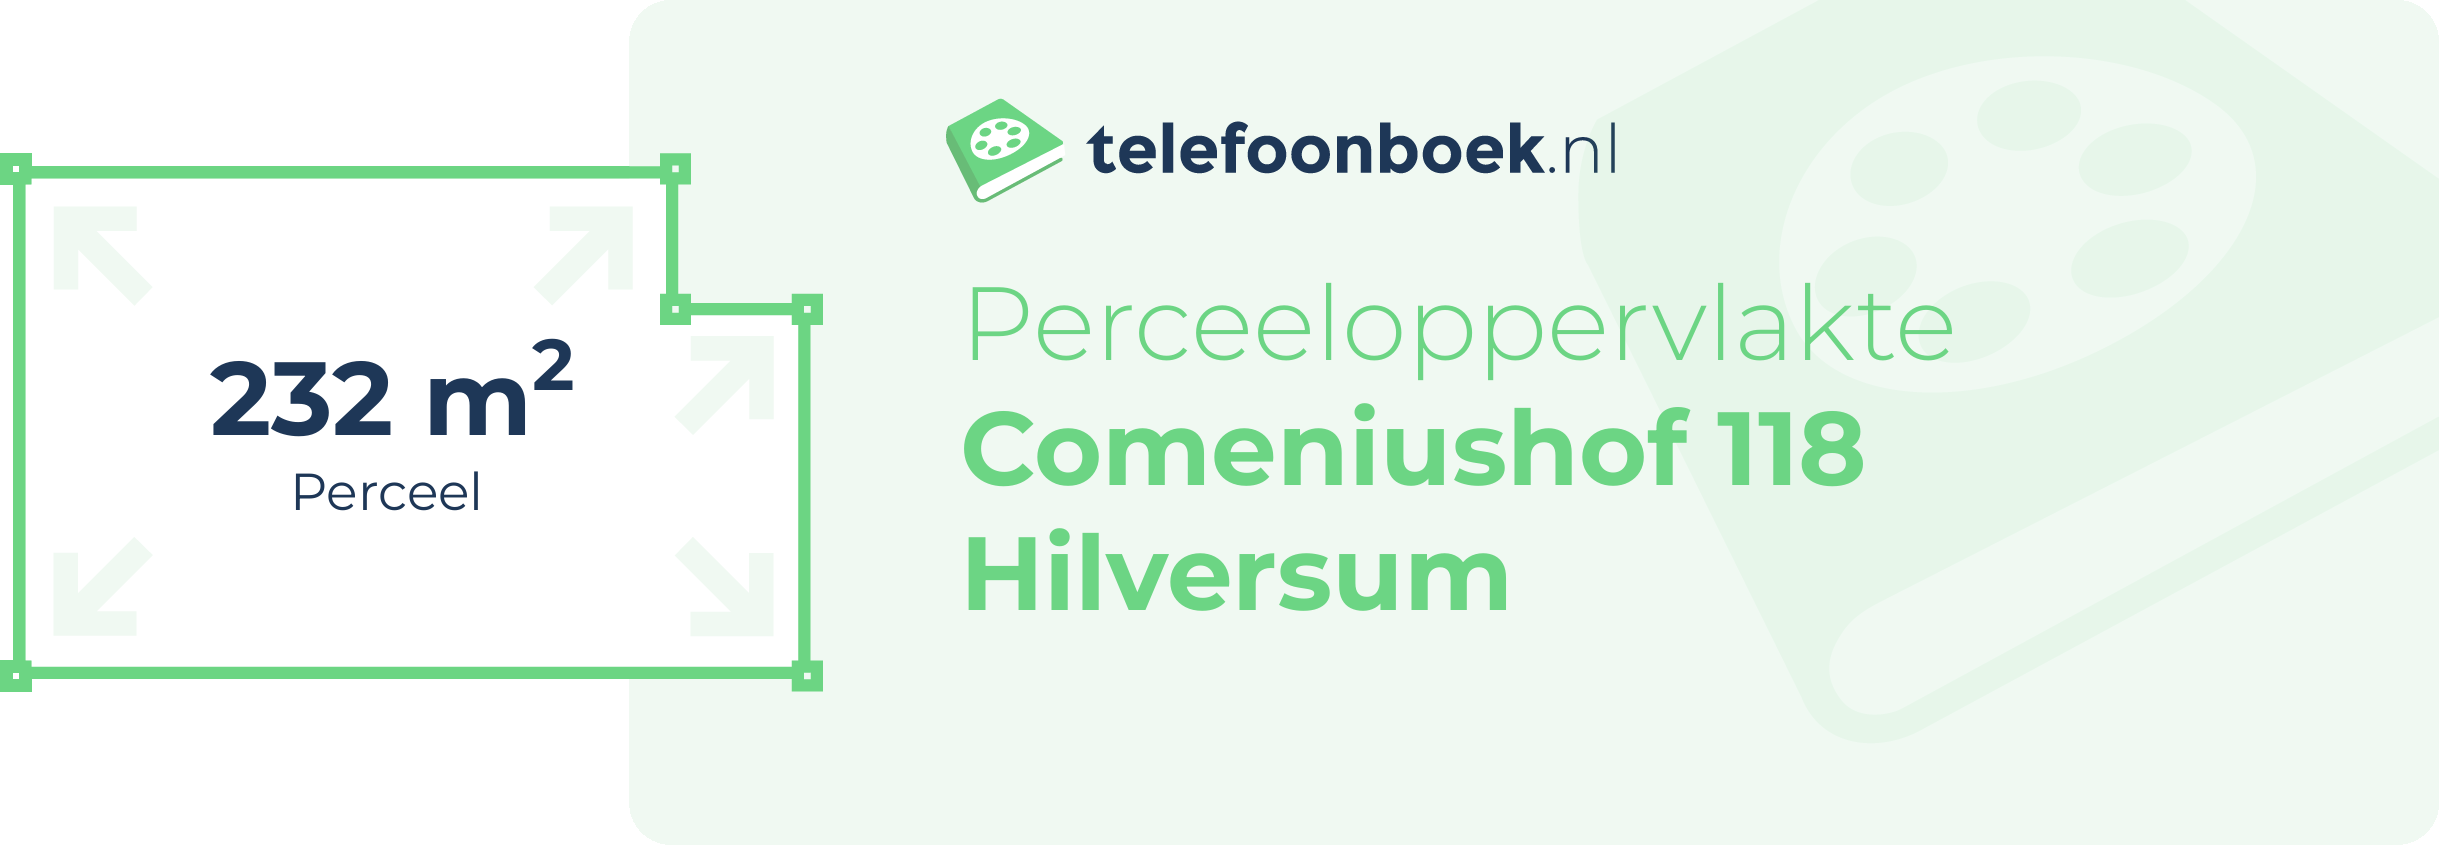 Perceeloppervlakte Comeniushof 118 Hilversum